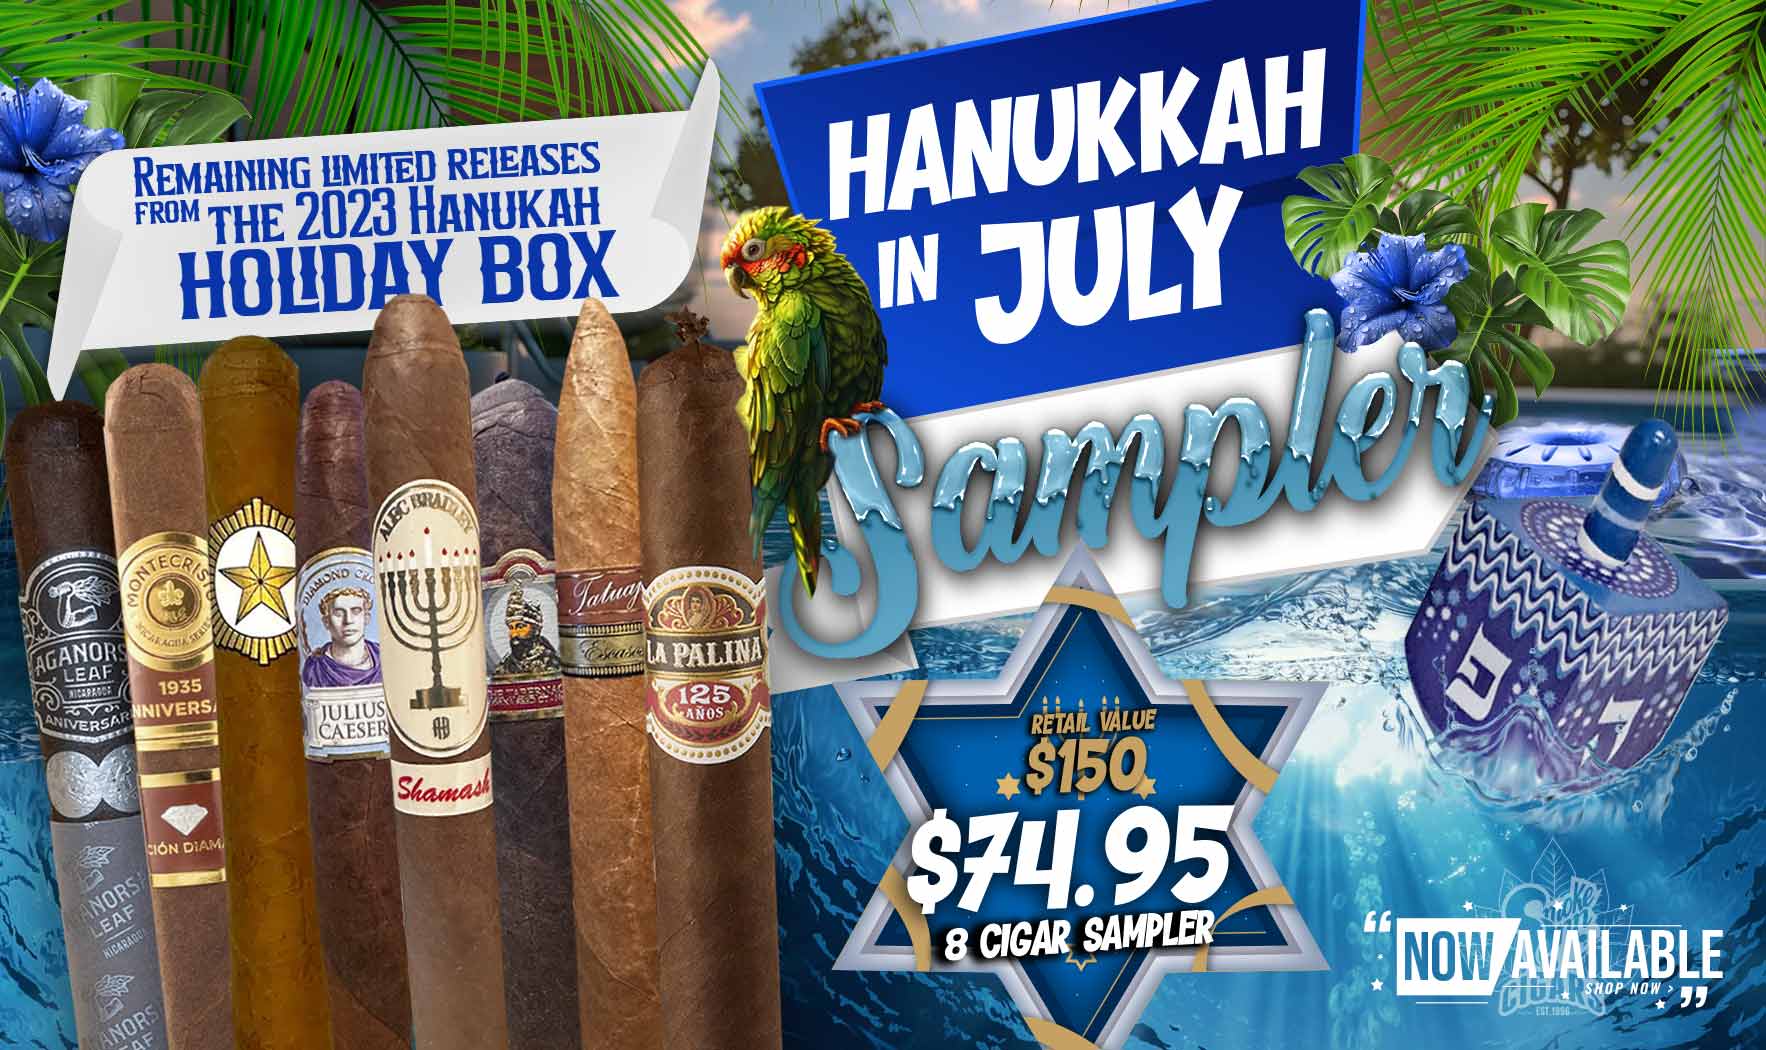 Hanukkah in July Sampler - 8 Cigars